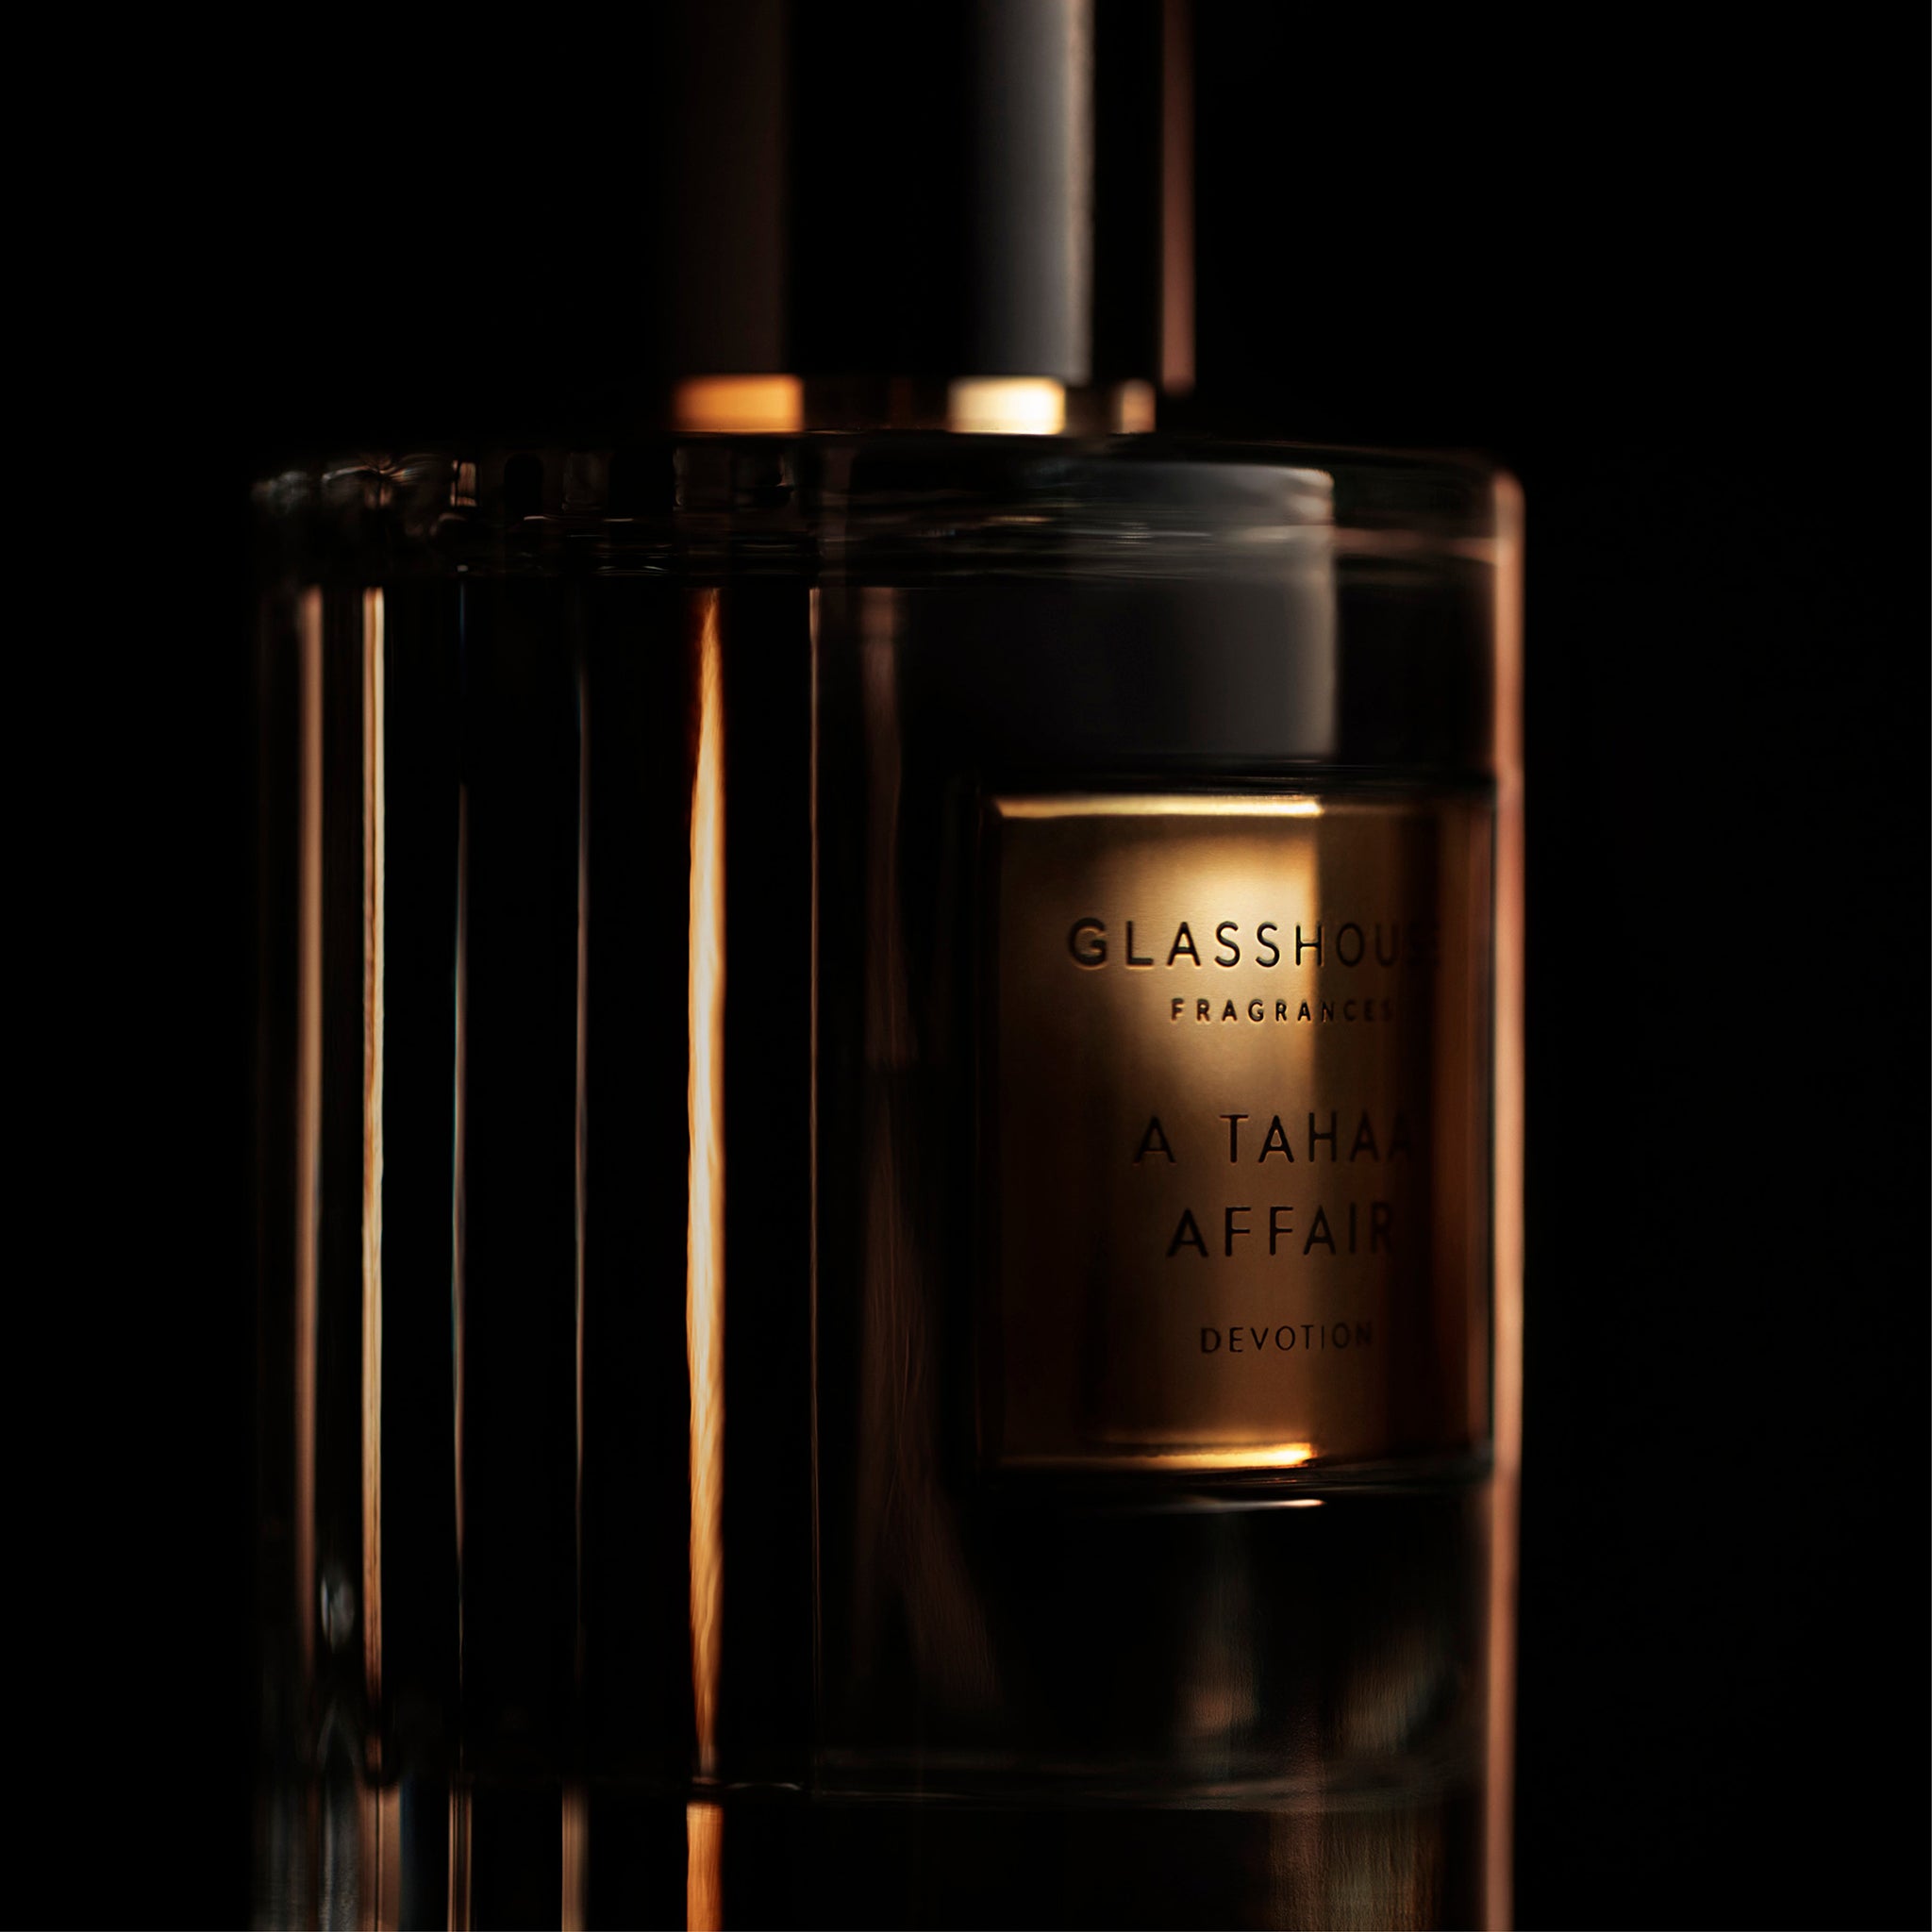 Glasshouse Fragrances A Tahaa Affair Vanilla Caramel 50mL Eau de Parfum Spray dark and moody close-up product shot